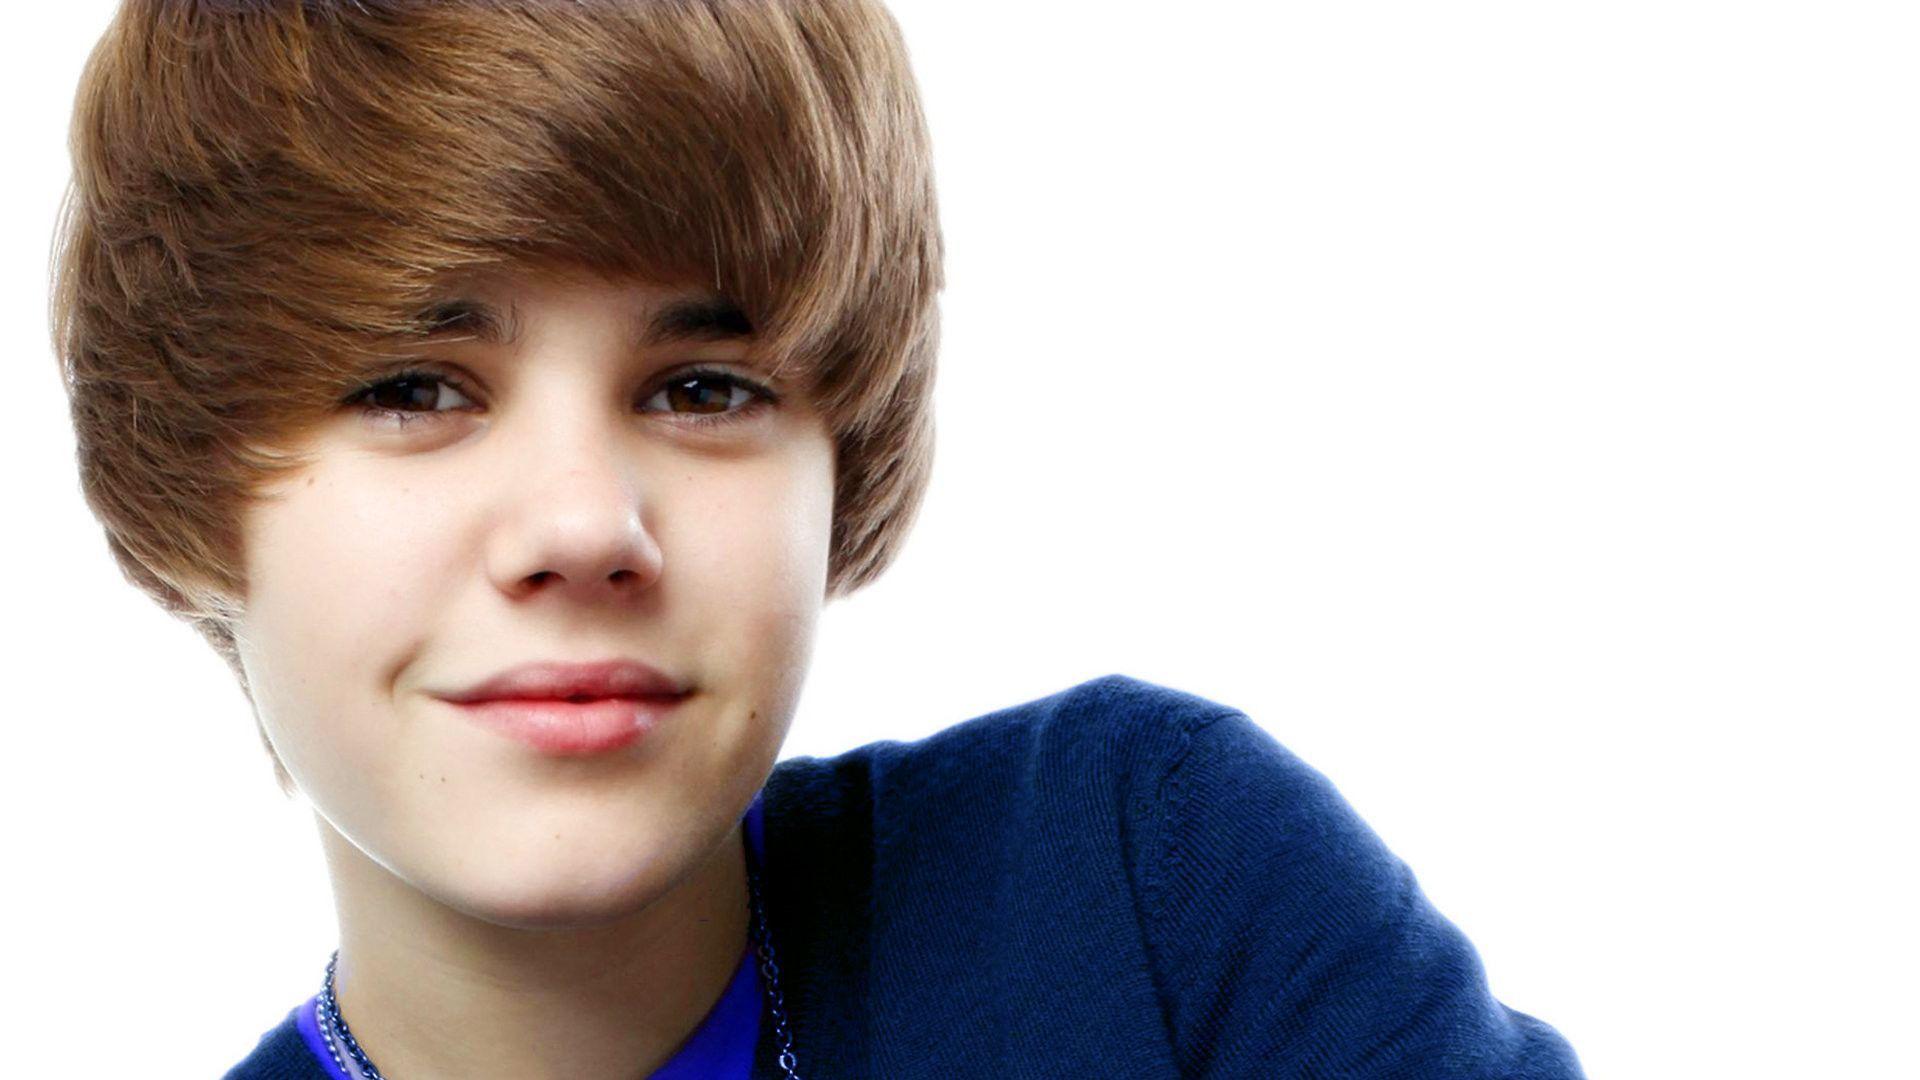 Justin Bieber Wallpaper Download free Justin Bieber Wallpaper. Justin bieber wallpaper, Justin bieber, Justin bieber picture